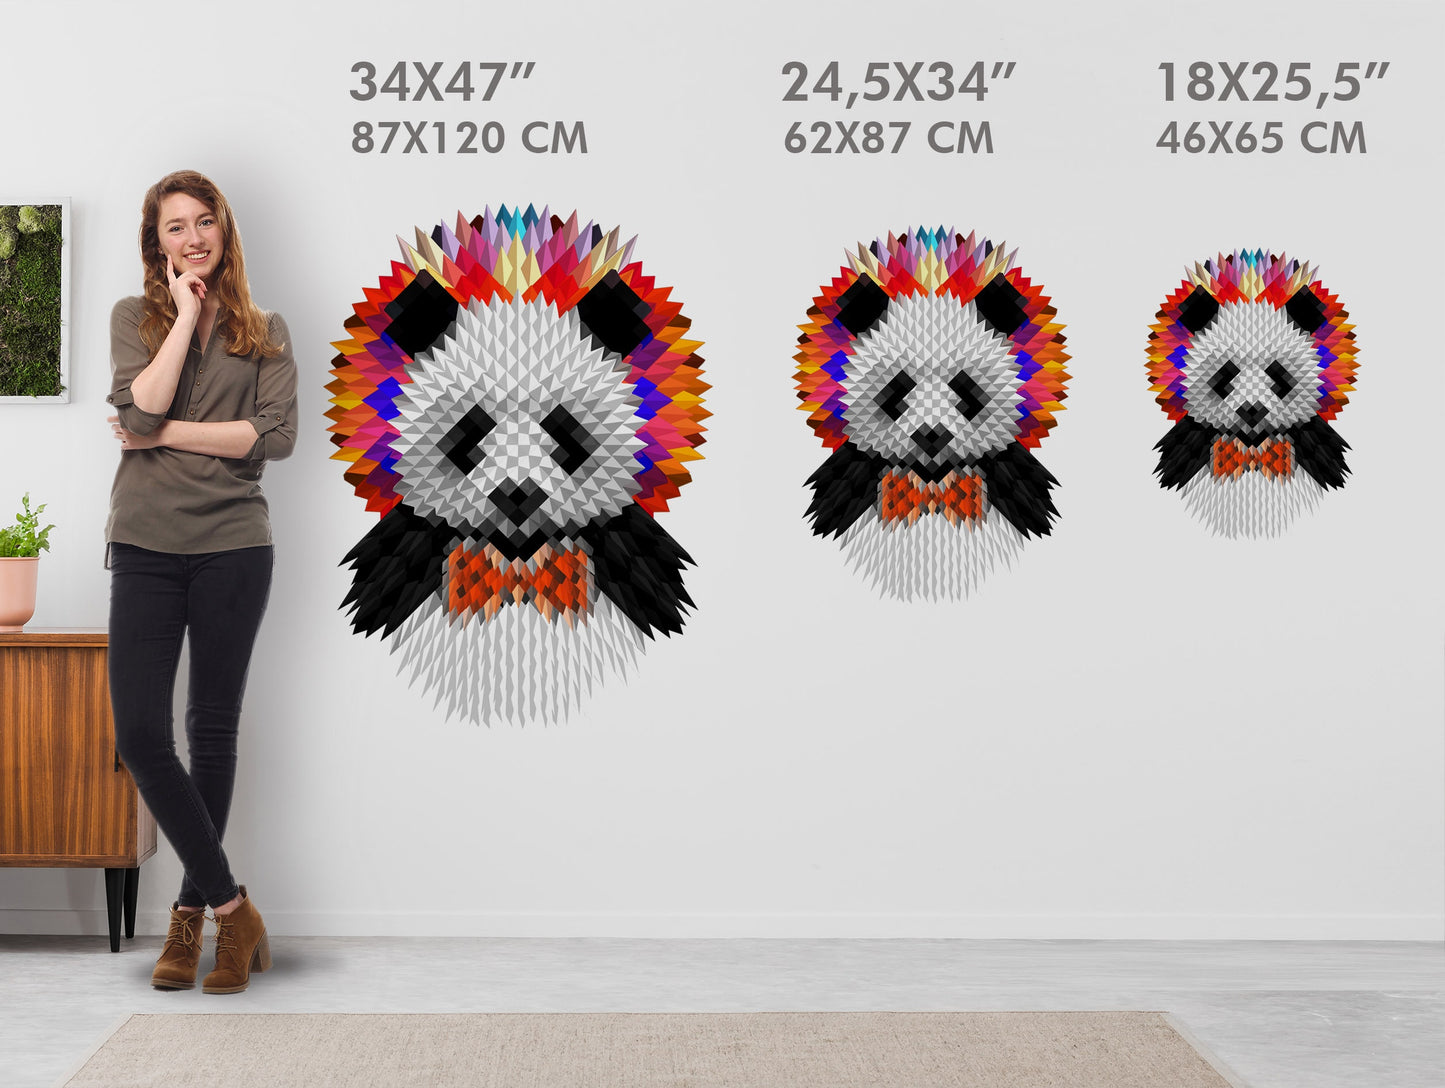 Panda Wall Sticker, Funny Panda Wall Decal, Vinyl Panda Home Decor, Colorful Panda Wall Art Gift, Nursery Kids Room Panda Art Wall Decal